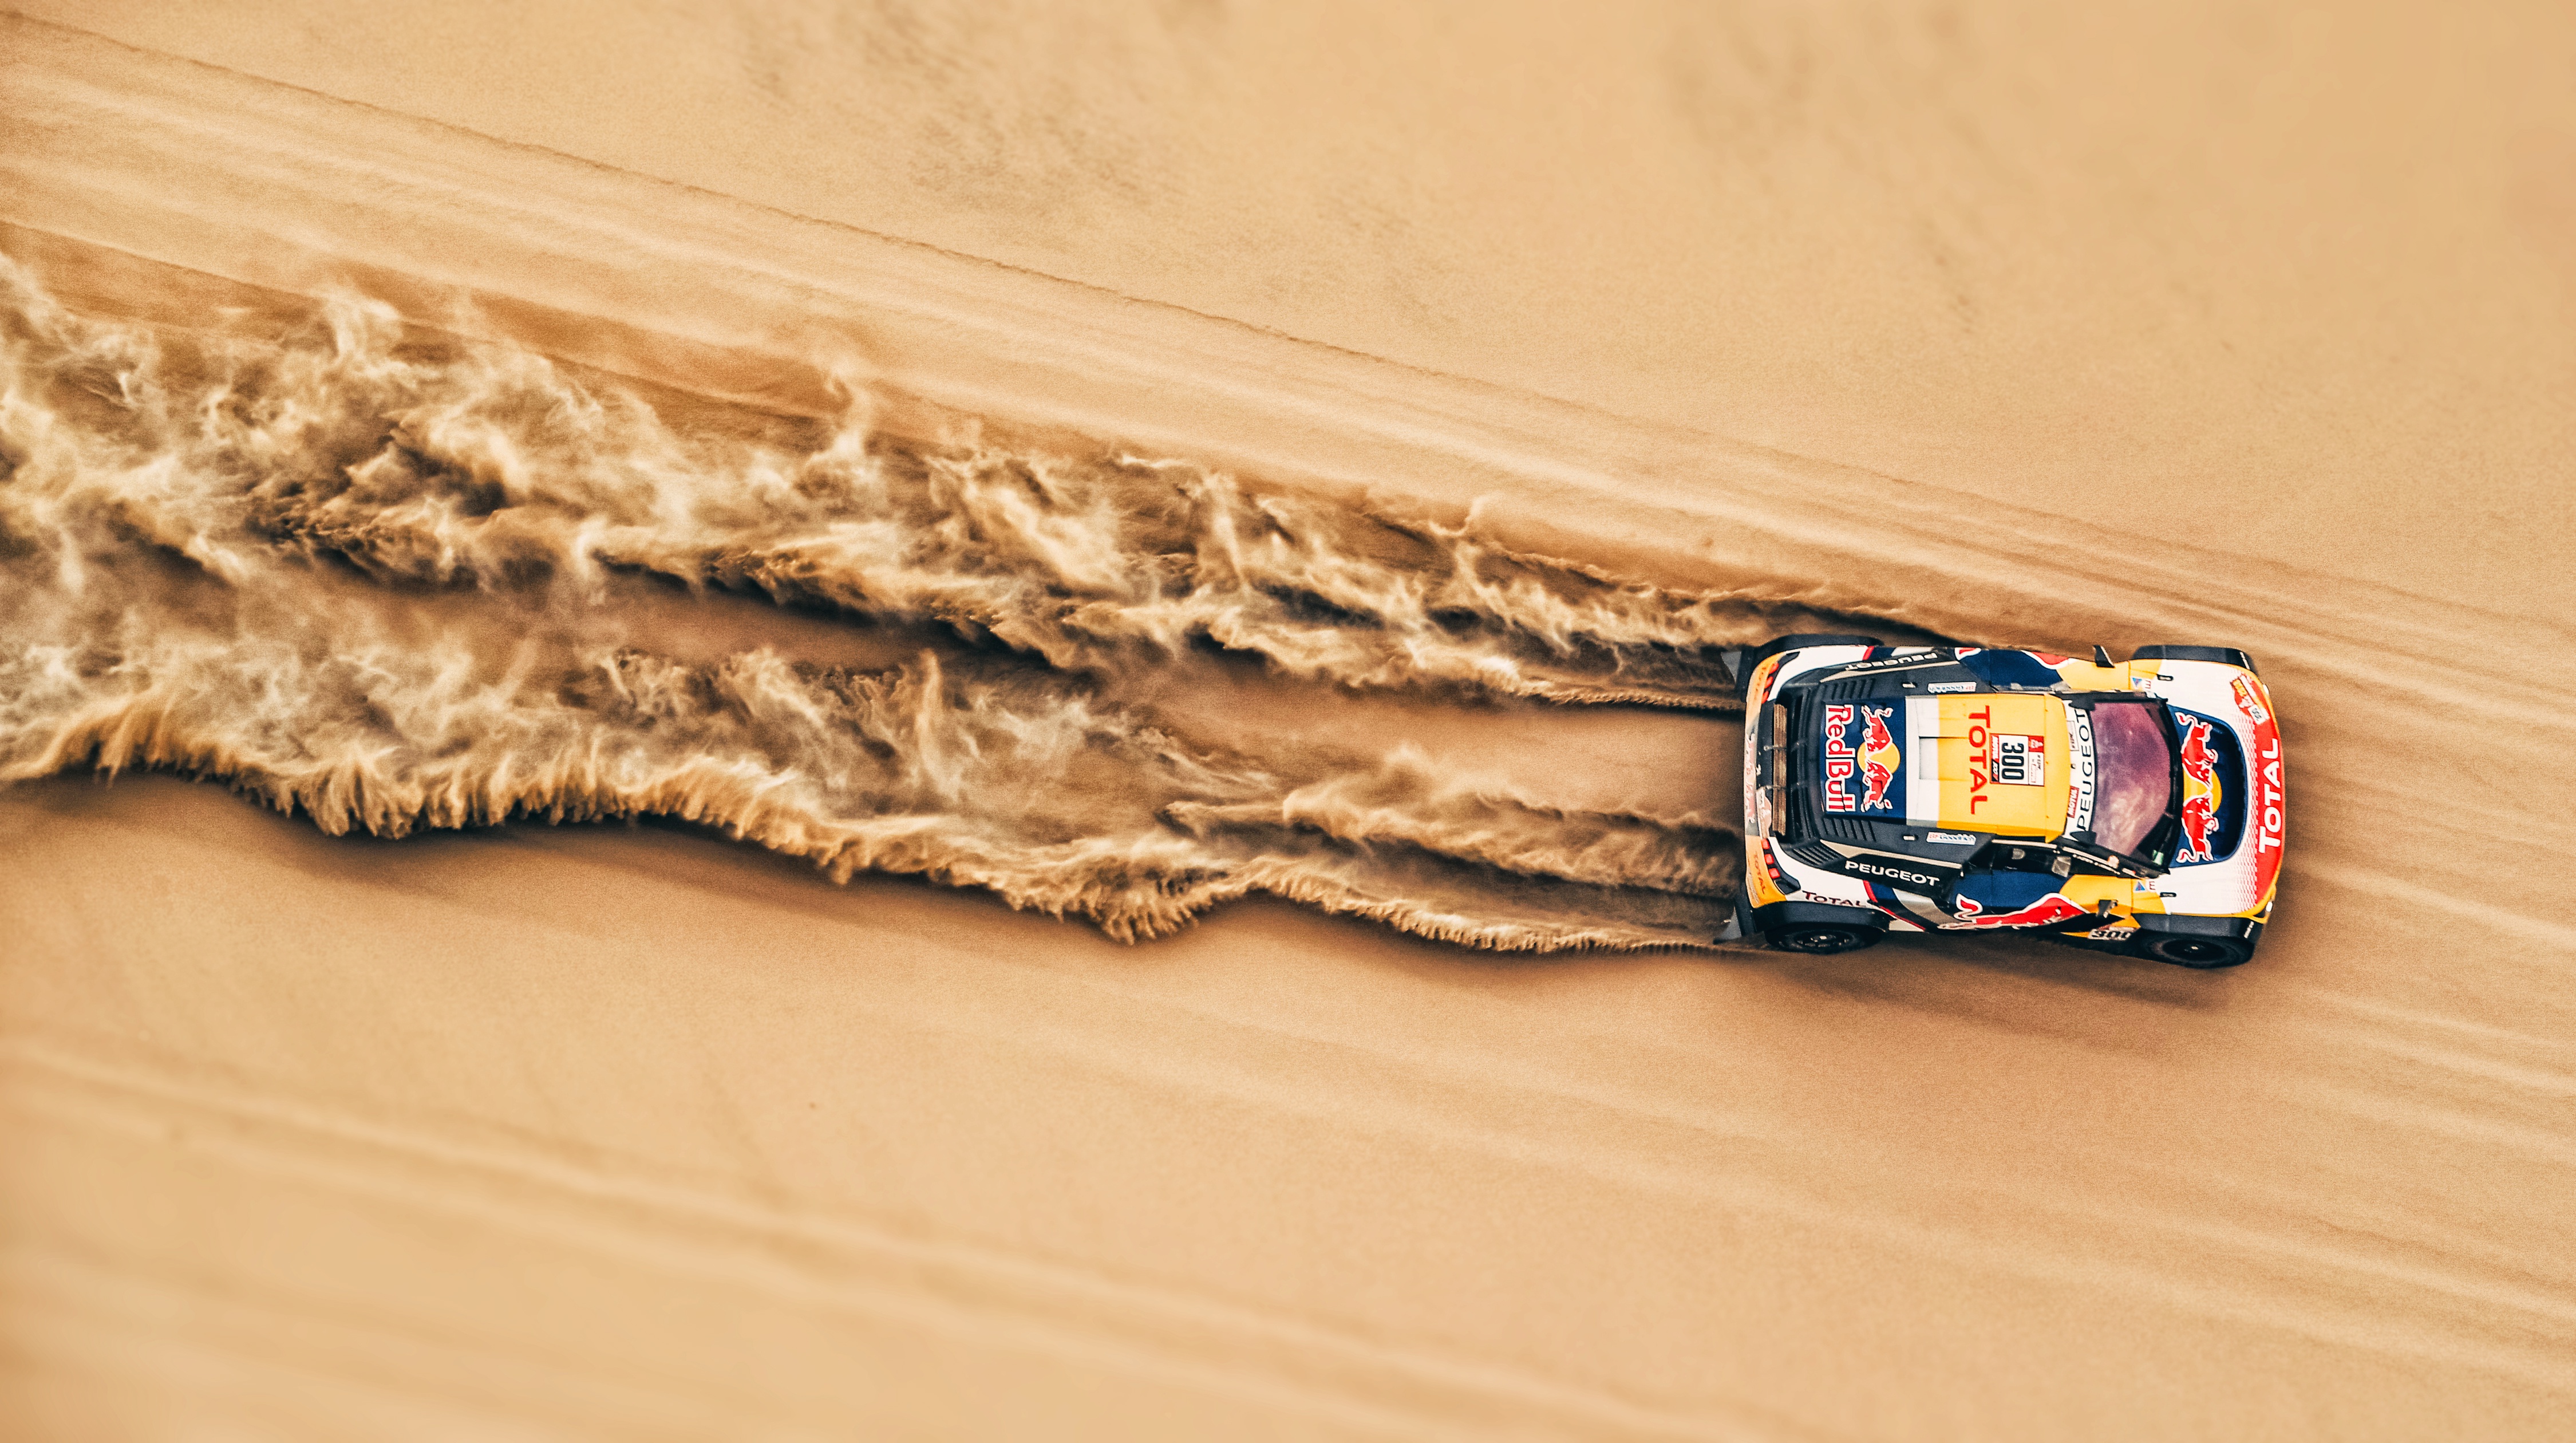 Скоростная машина на ралли едет по песку